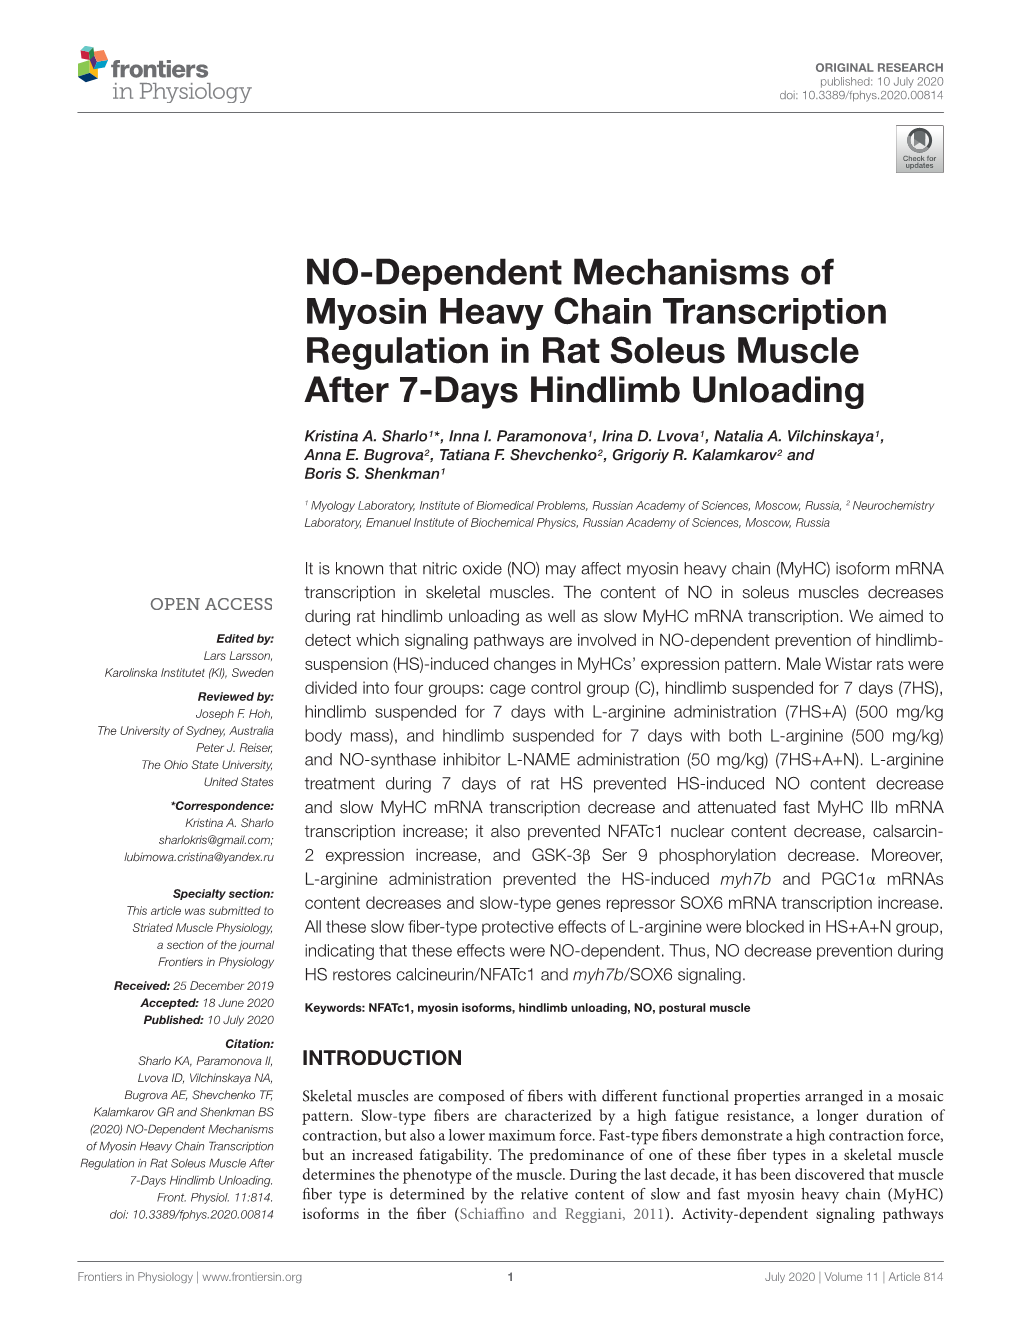 NO-Dependent Mechanisms of Myosin Heavy Chain Transcription Regulation in Rat Soleus Muscle After 7-Days Hindlimb Unloading